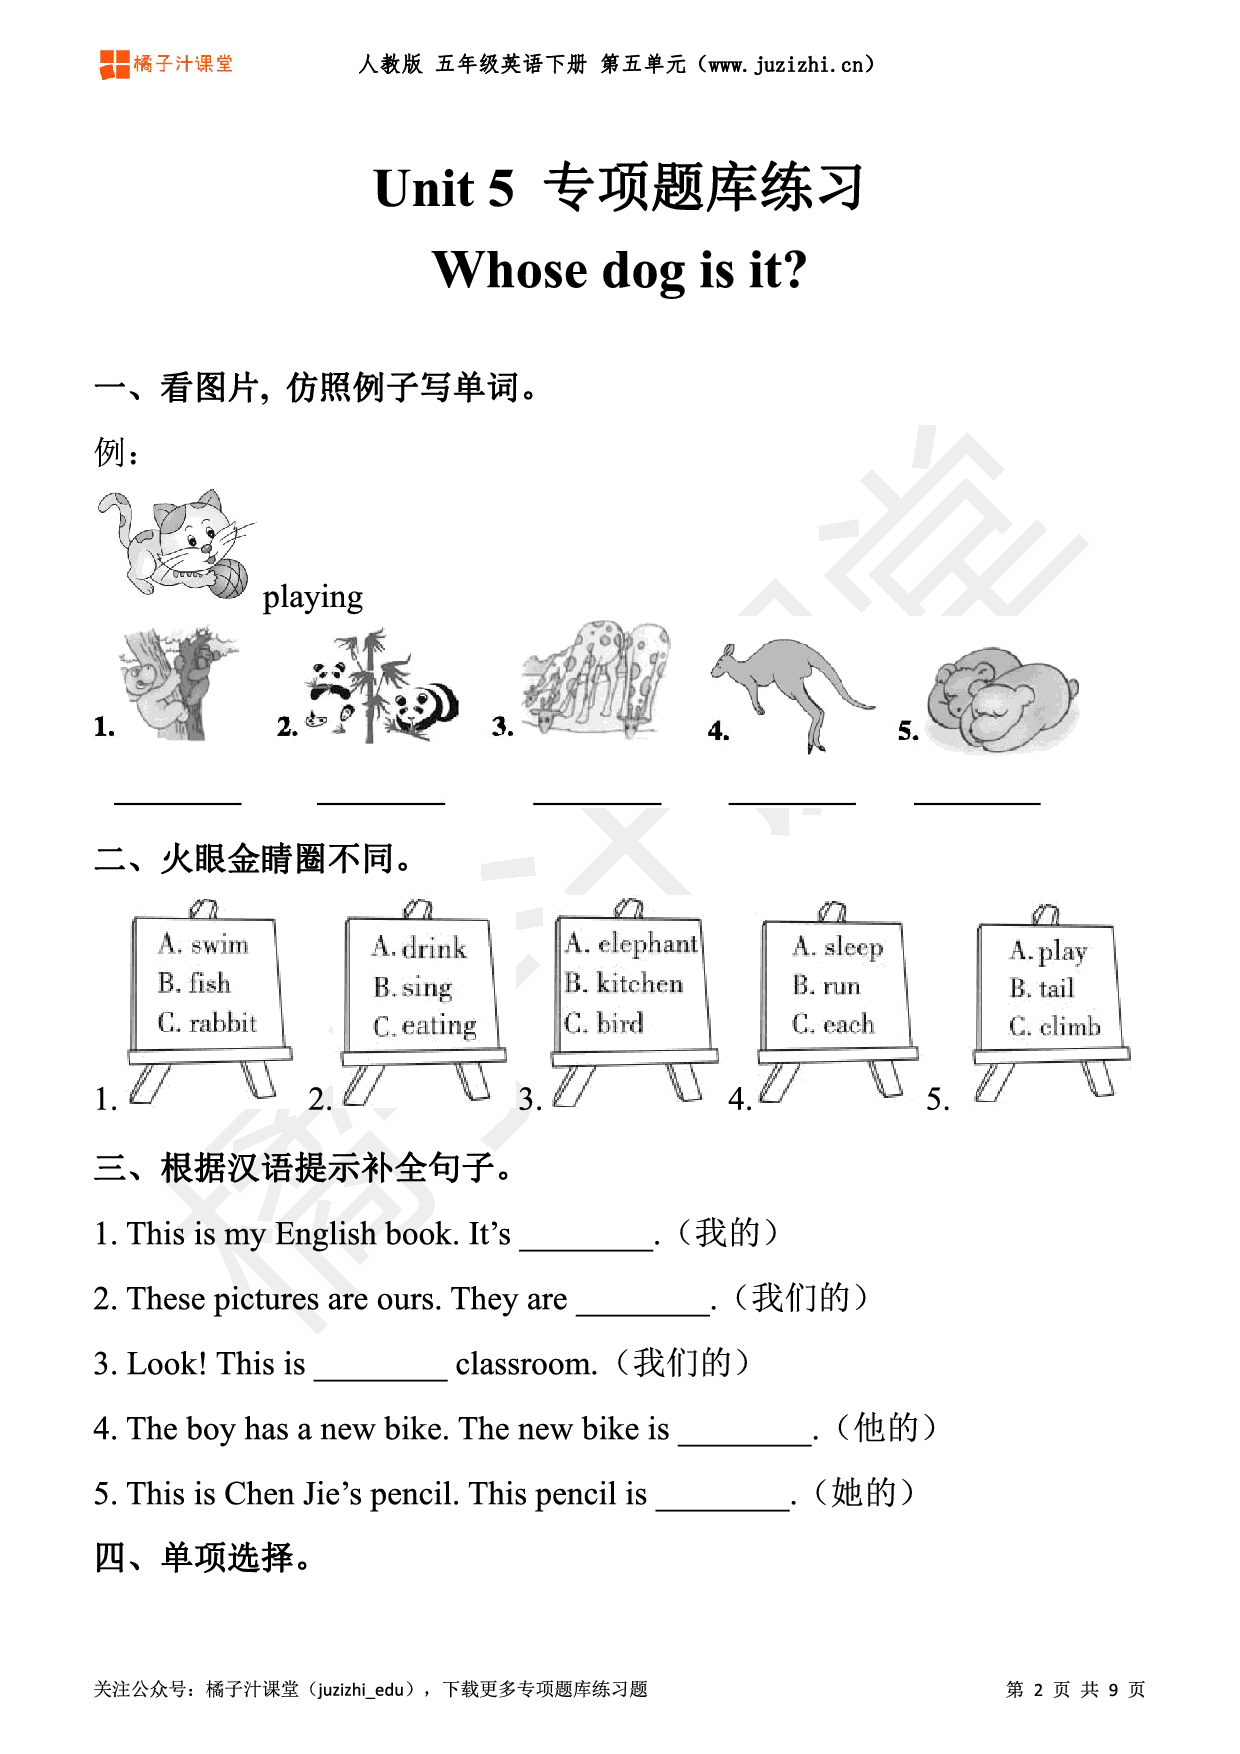 【PEP英语】五年级下册Unit 5《Whose dog is it?》专项题库练习